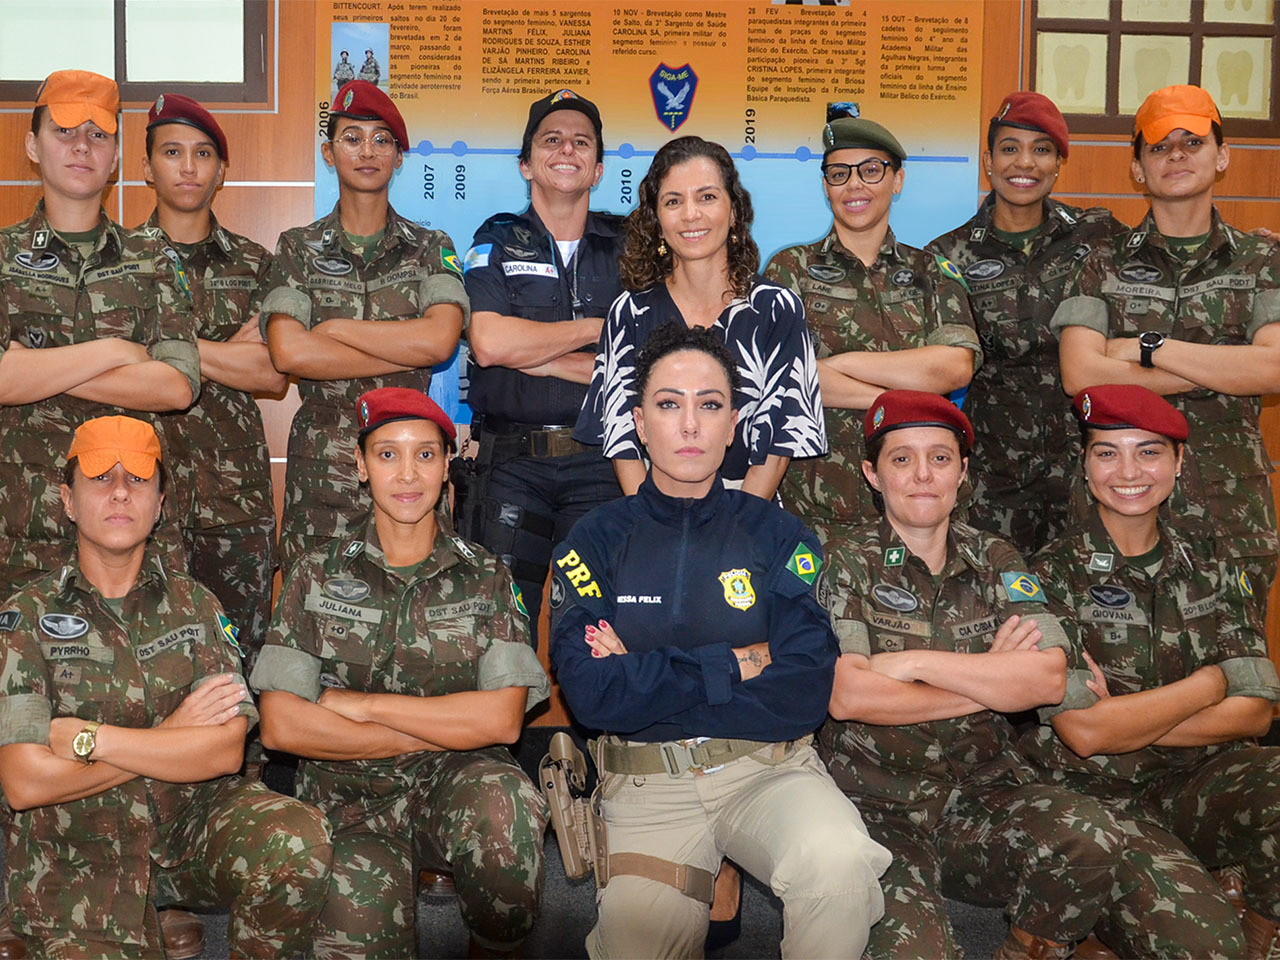 Brazilian🇧🇷 female Army Soldier /Exército Brasileiro